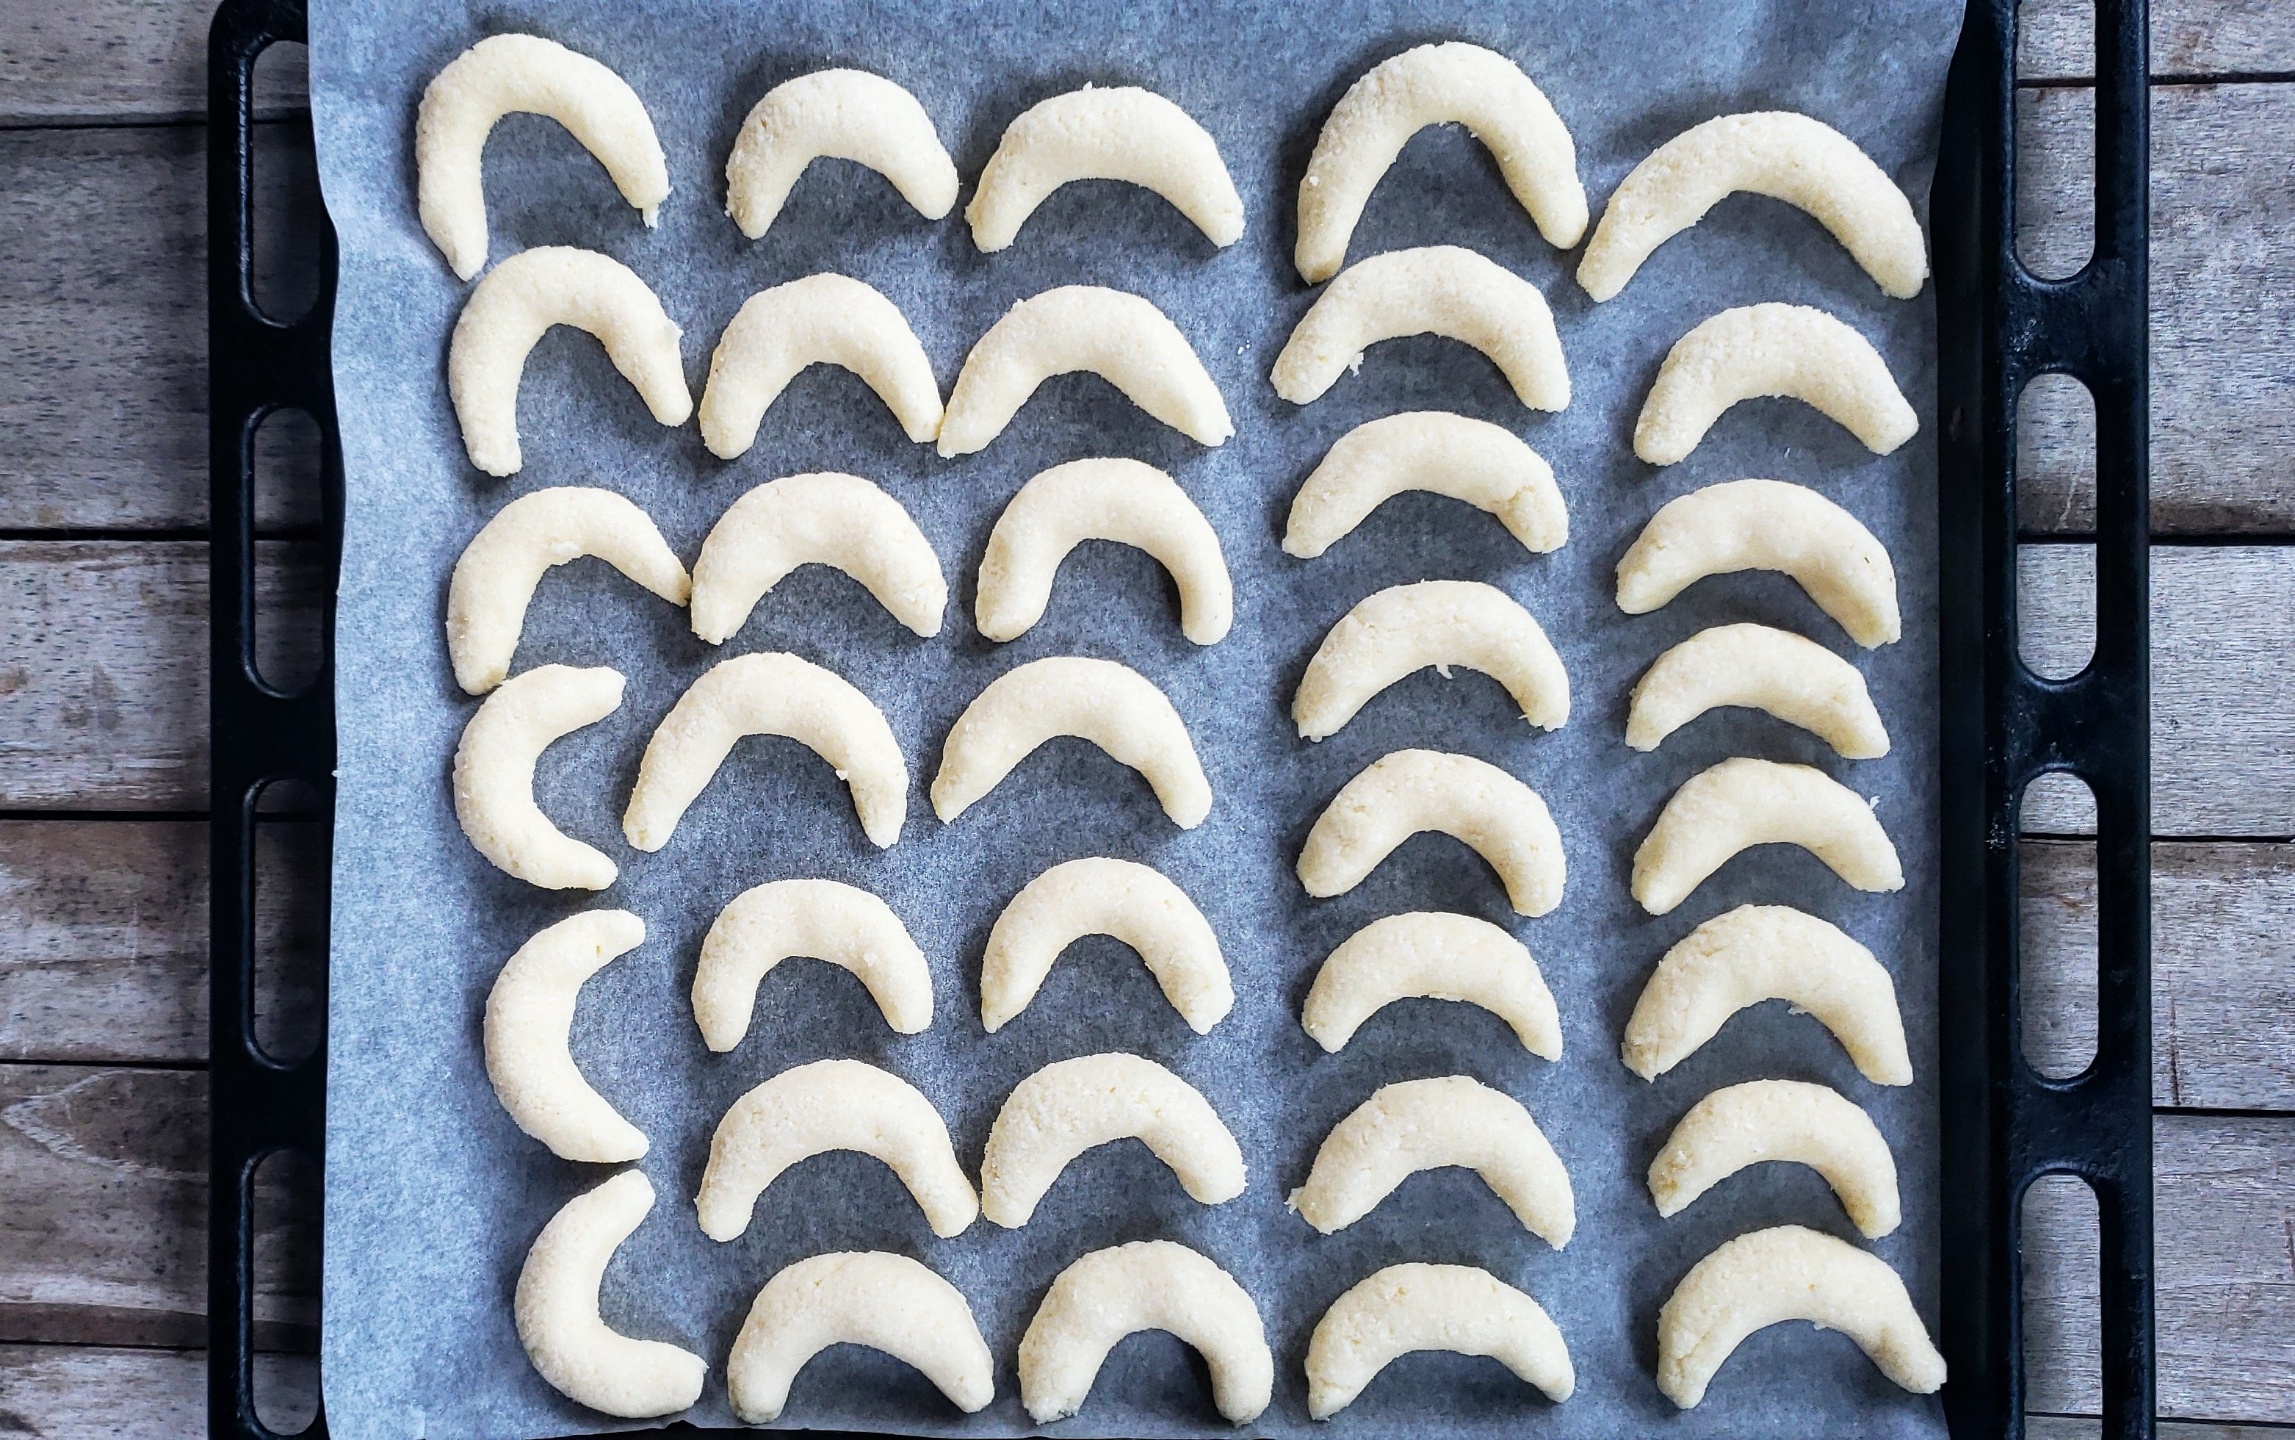 Moon shaped cookies lying on a baking sheet